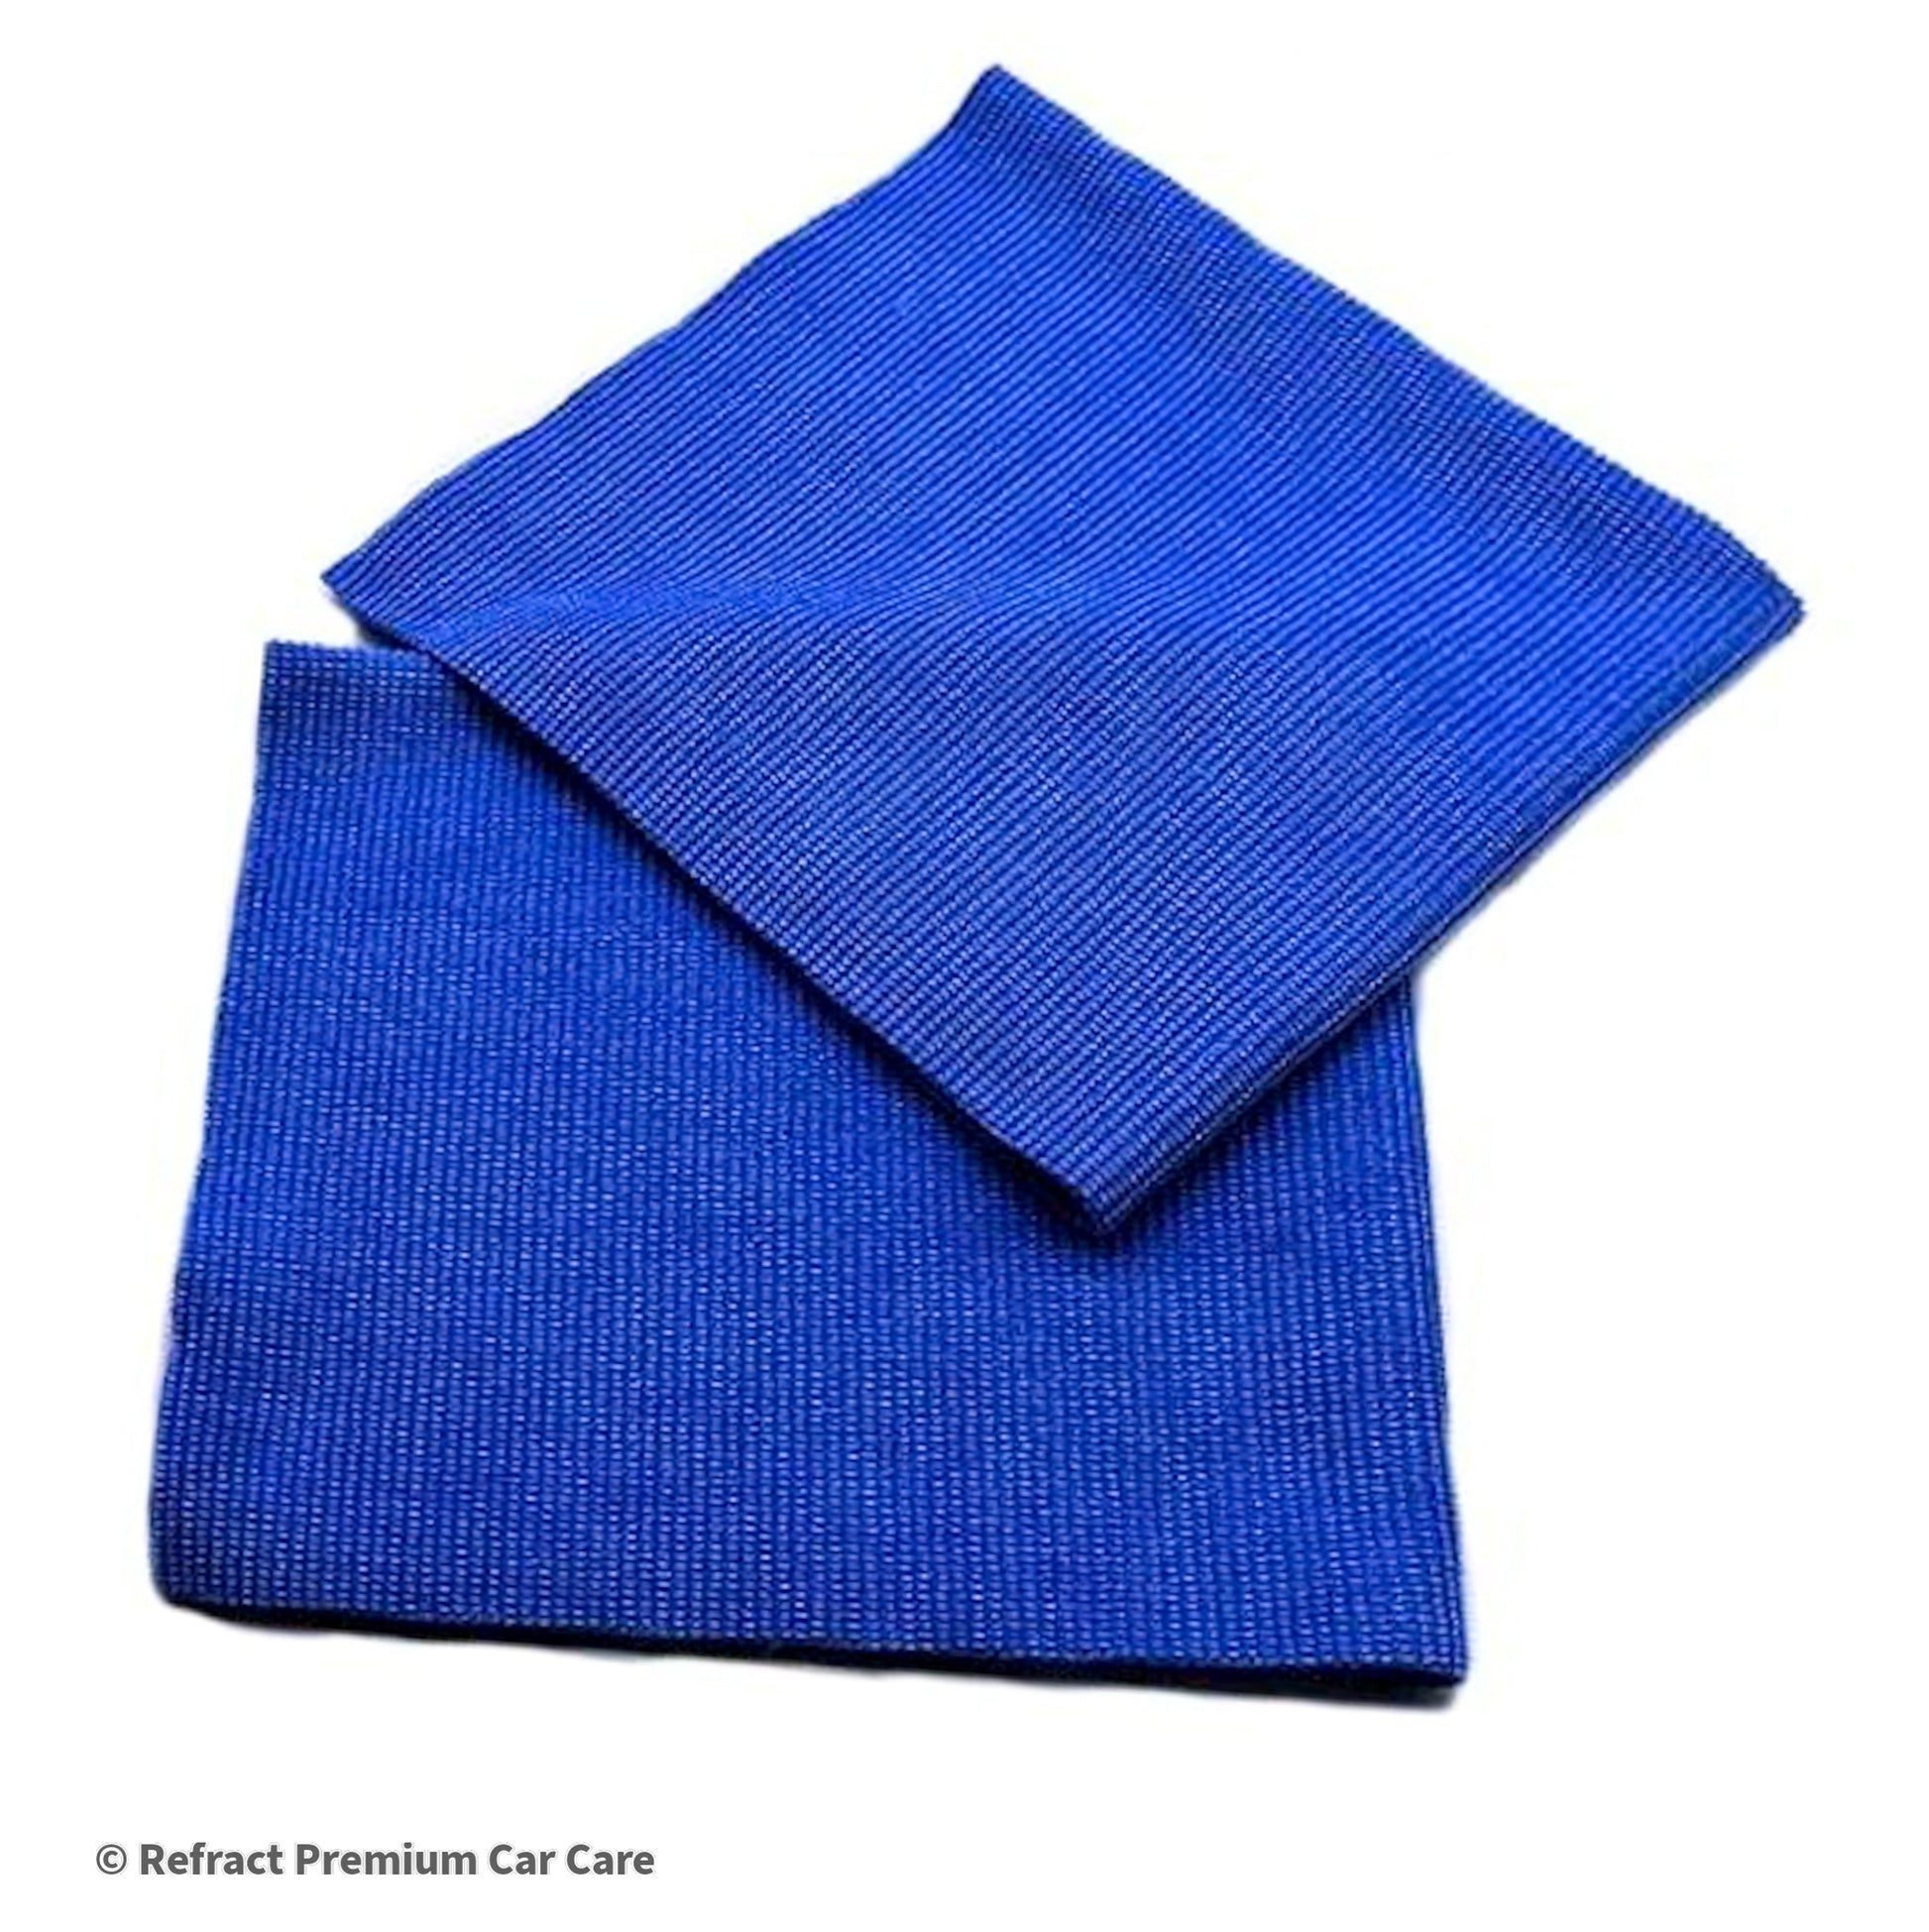 Refract Premium Car Care Products Multi Purpose Edgeless Microfiber Towels $6.95